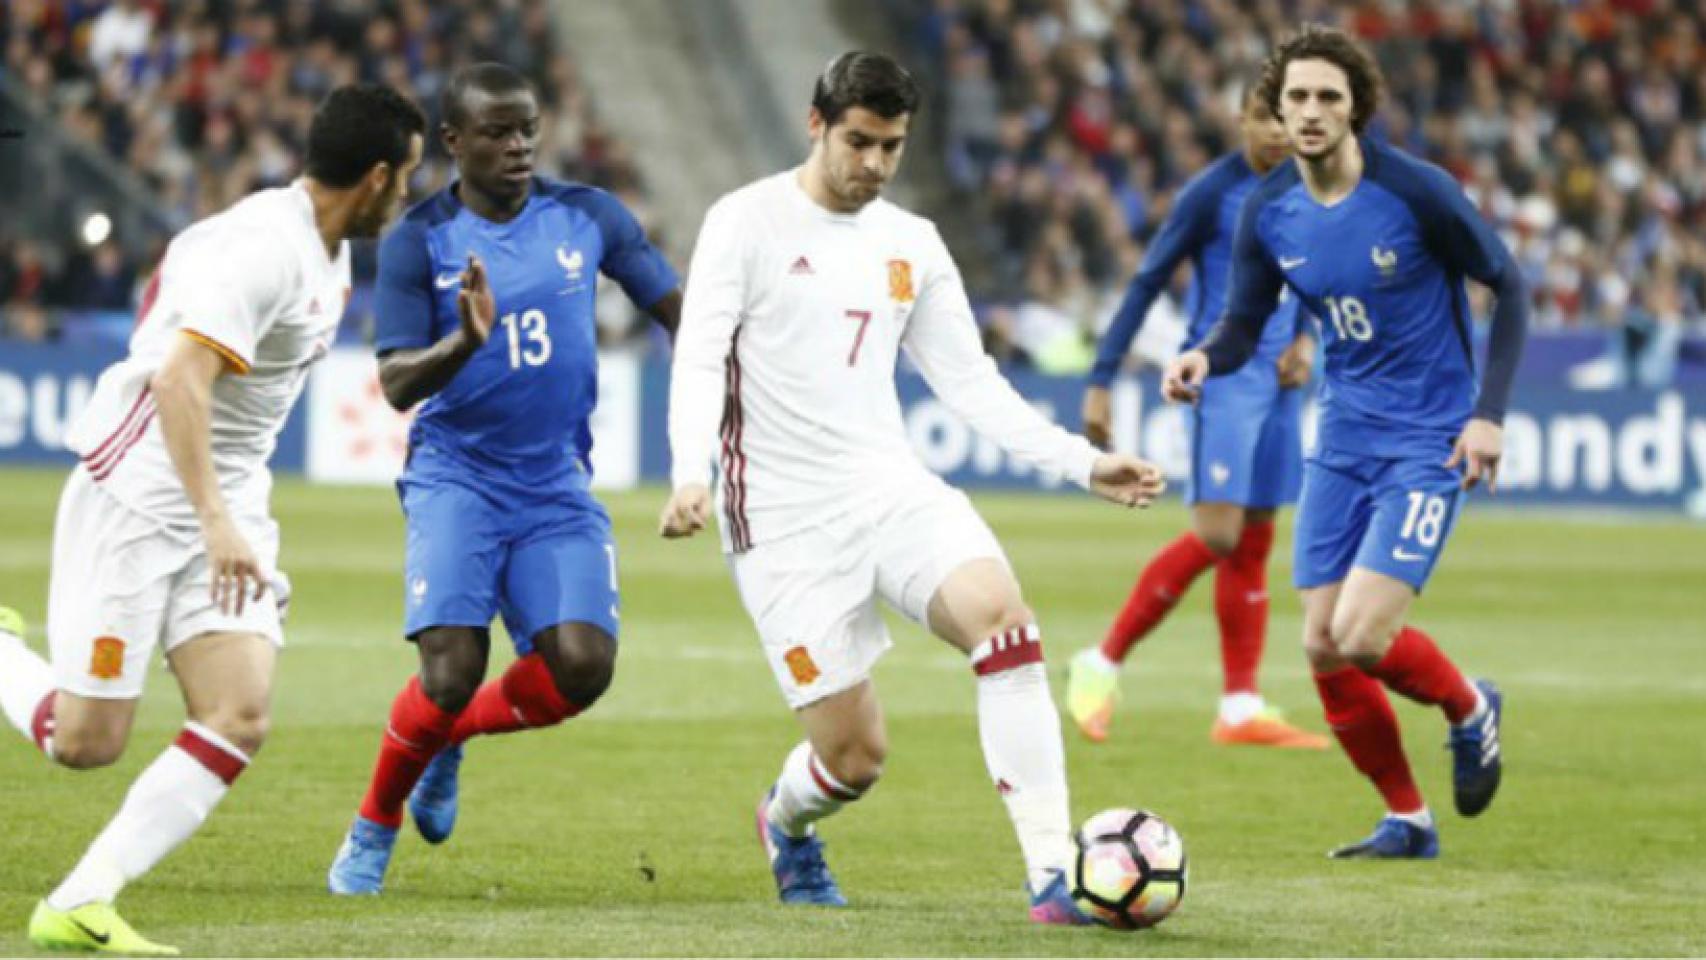 Morata durante el amistoso frente a Francia. Foto: Web (sefutbol.com)